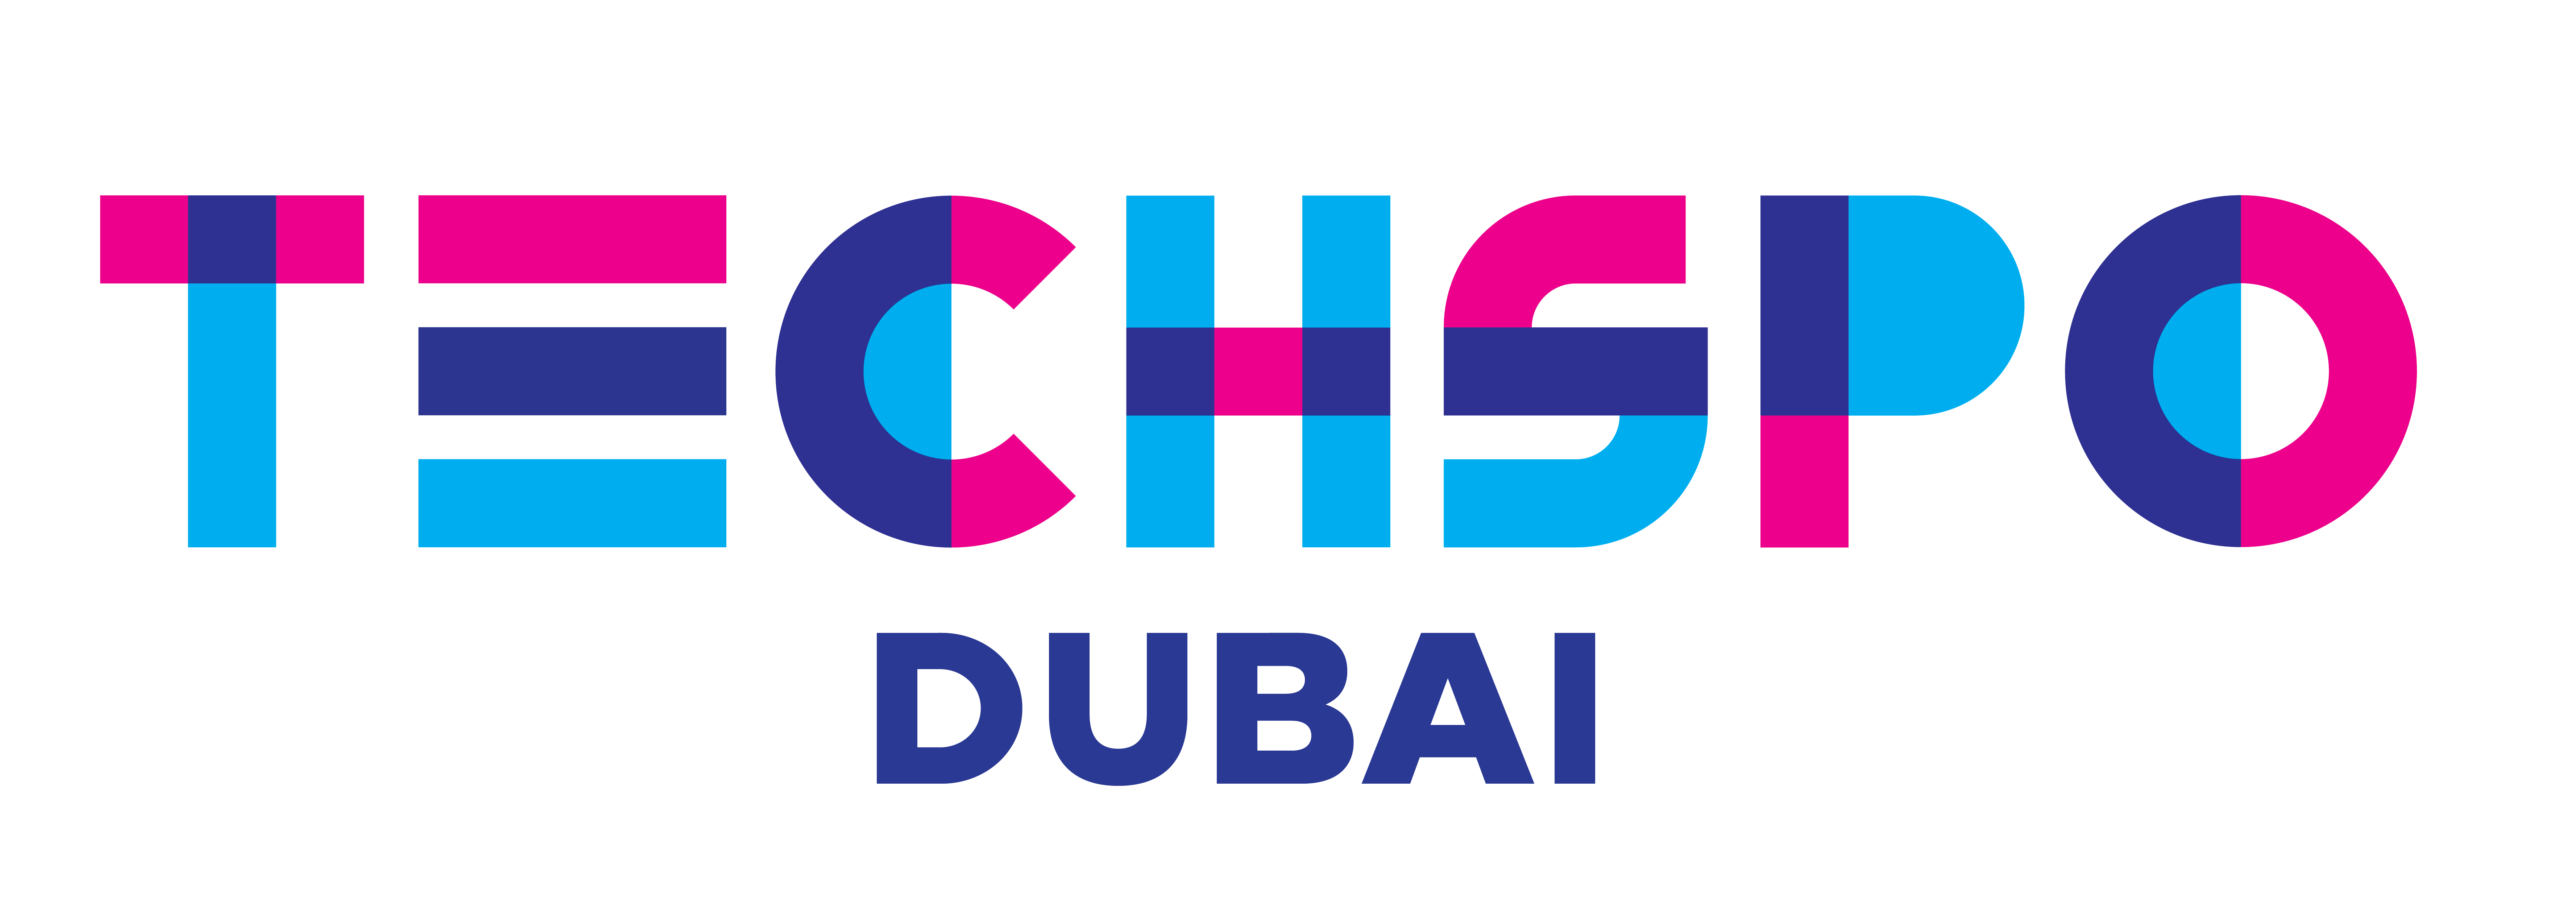 TECHSPO Dubai 2022 Technology Expo (Internet ~ Mobile ~ AdTech ~ MarTech ~ SaaS), Dubai, United Arab Emirates